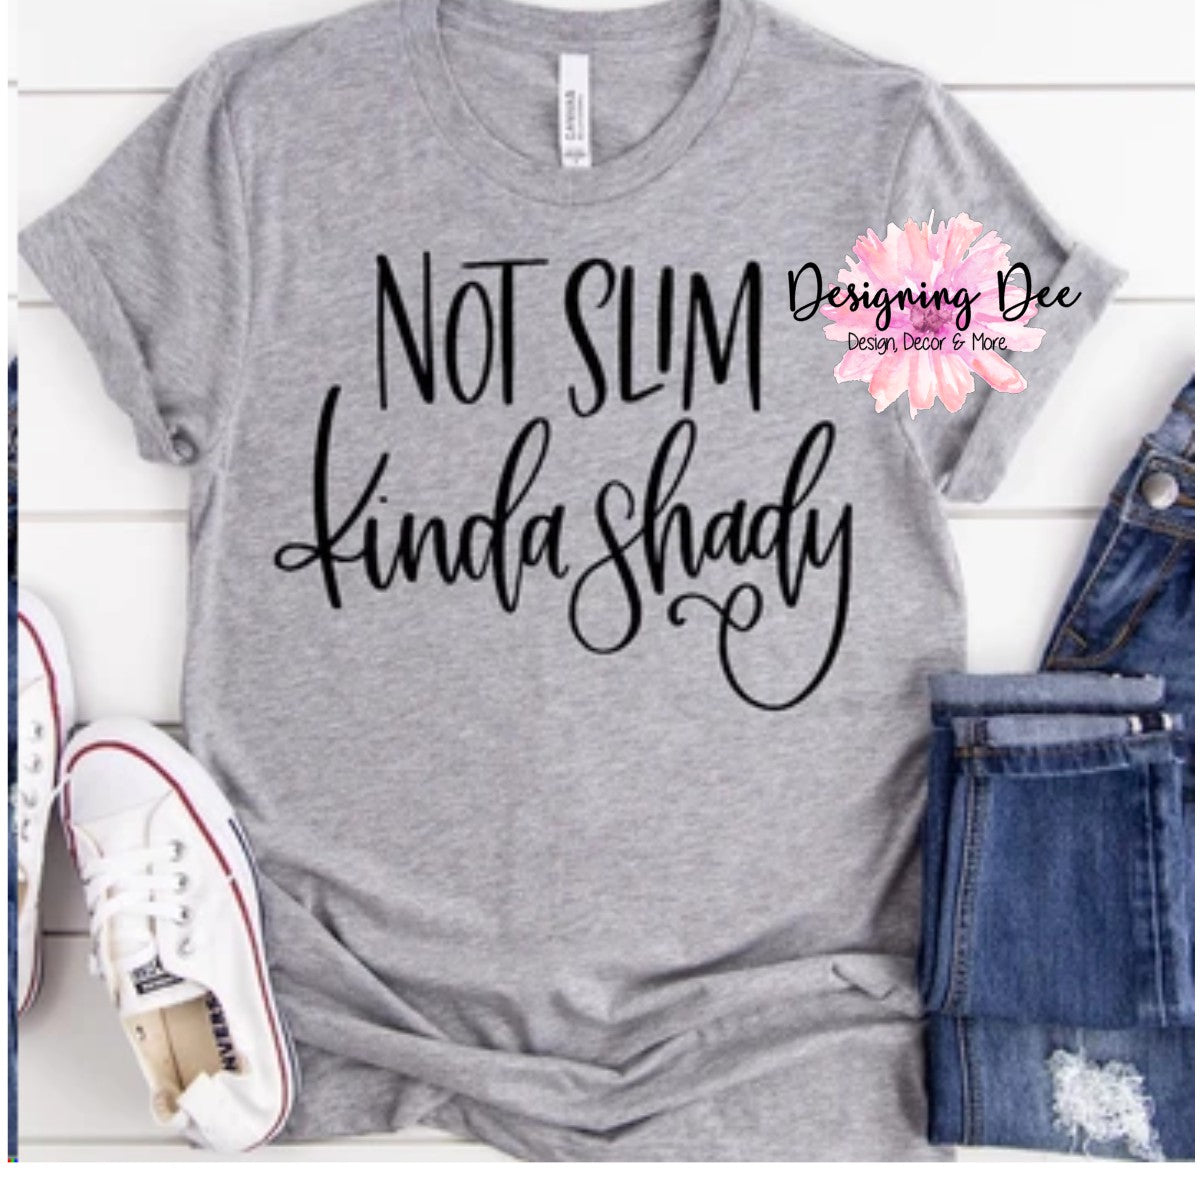 Not Slim, Kinda Shady Graphic T-shirt for Women